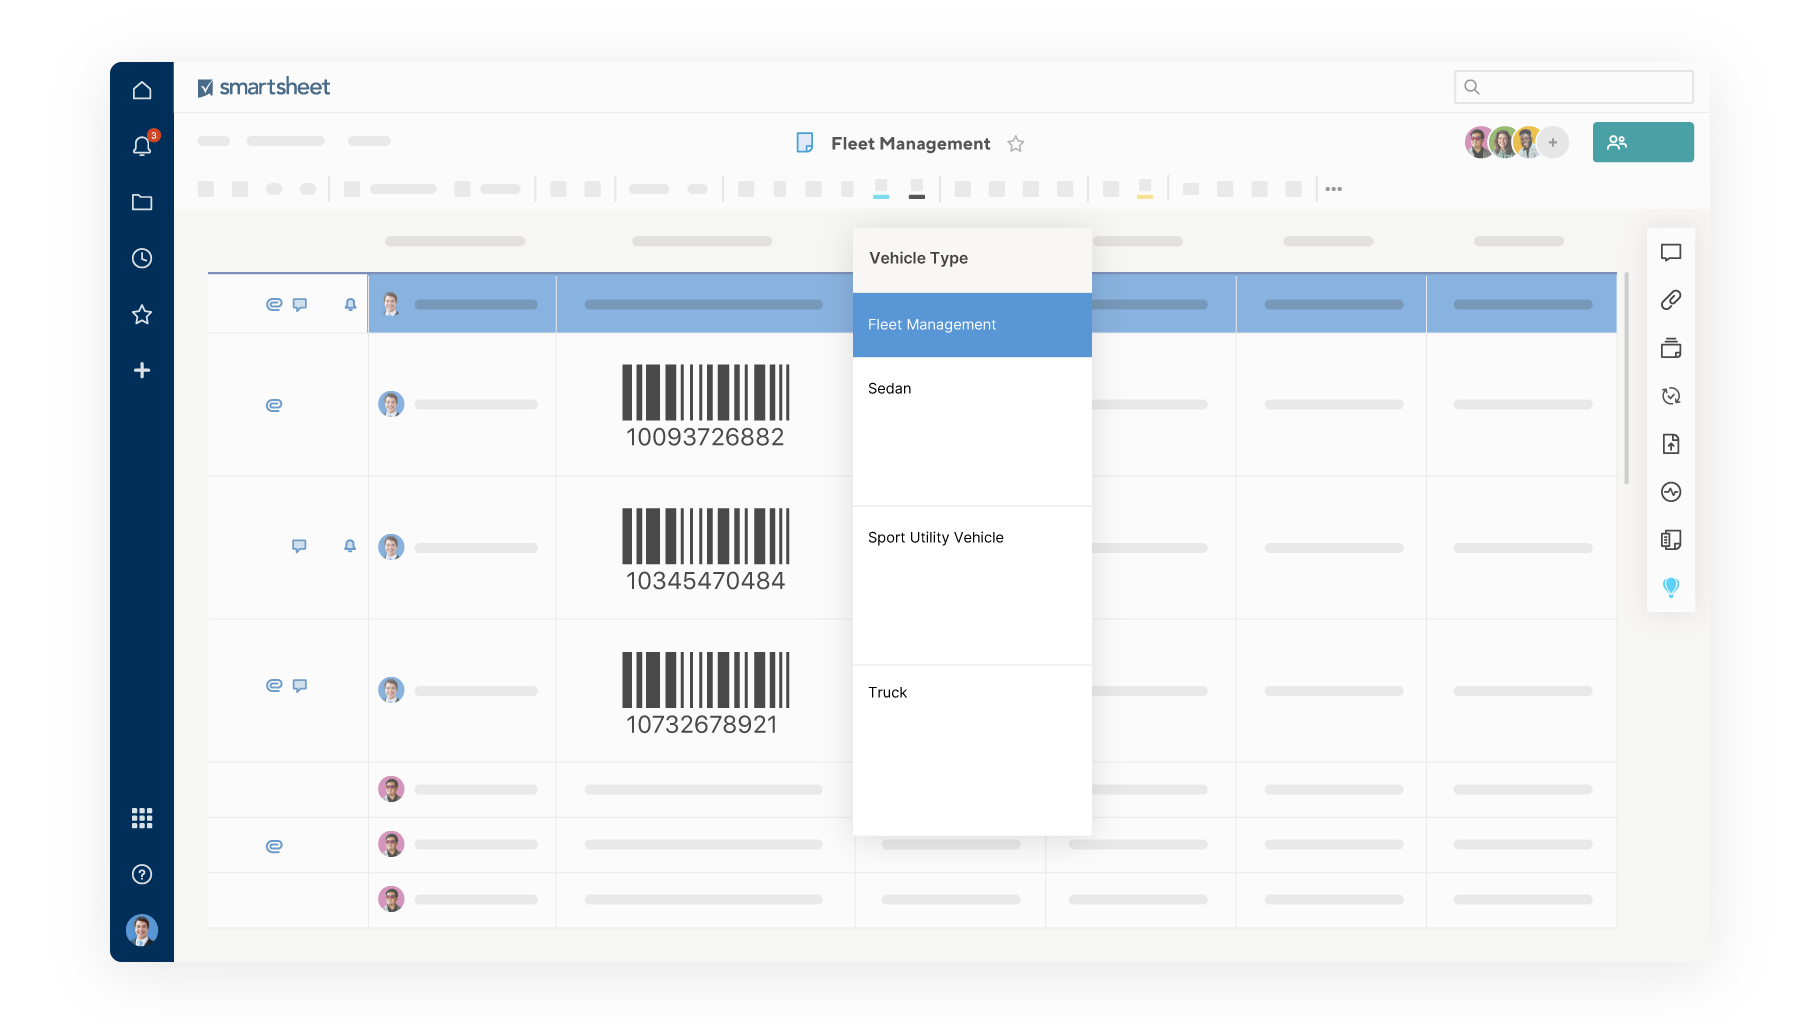 Smartsheet Field management sheet showing barcodes